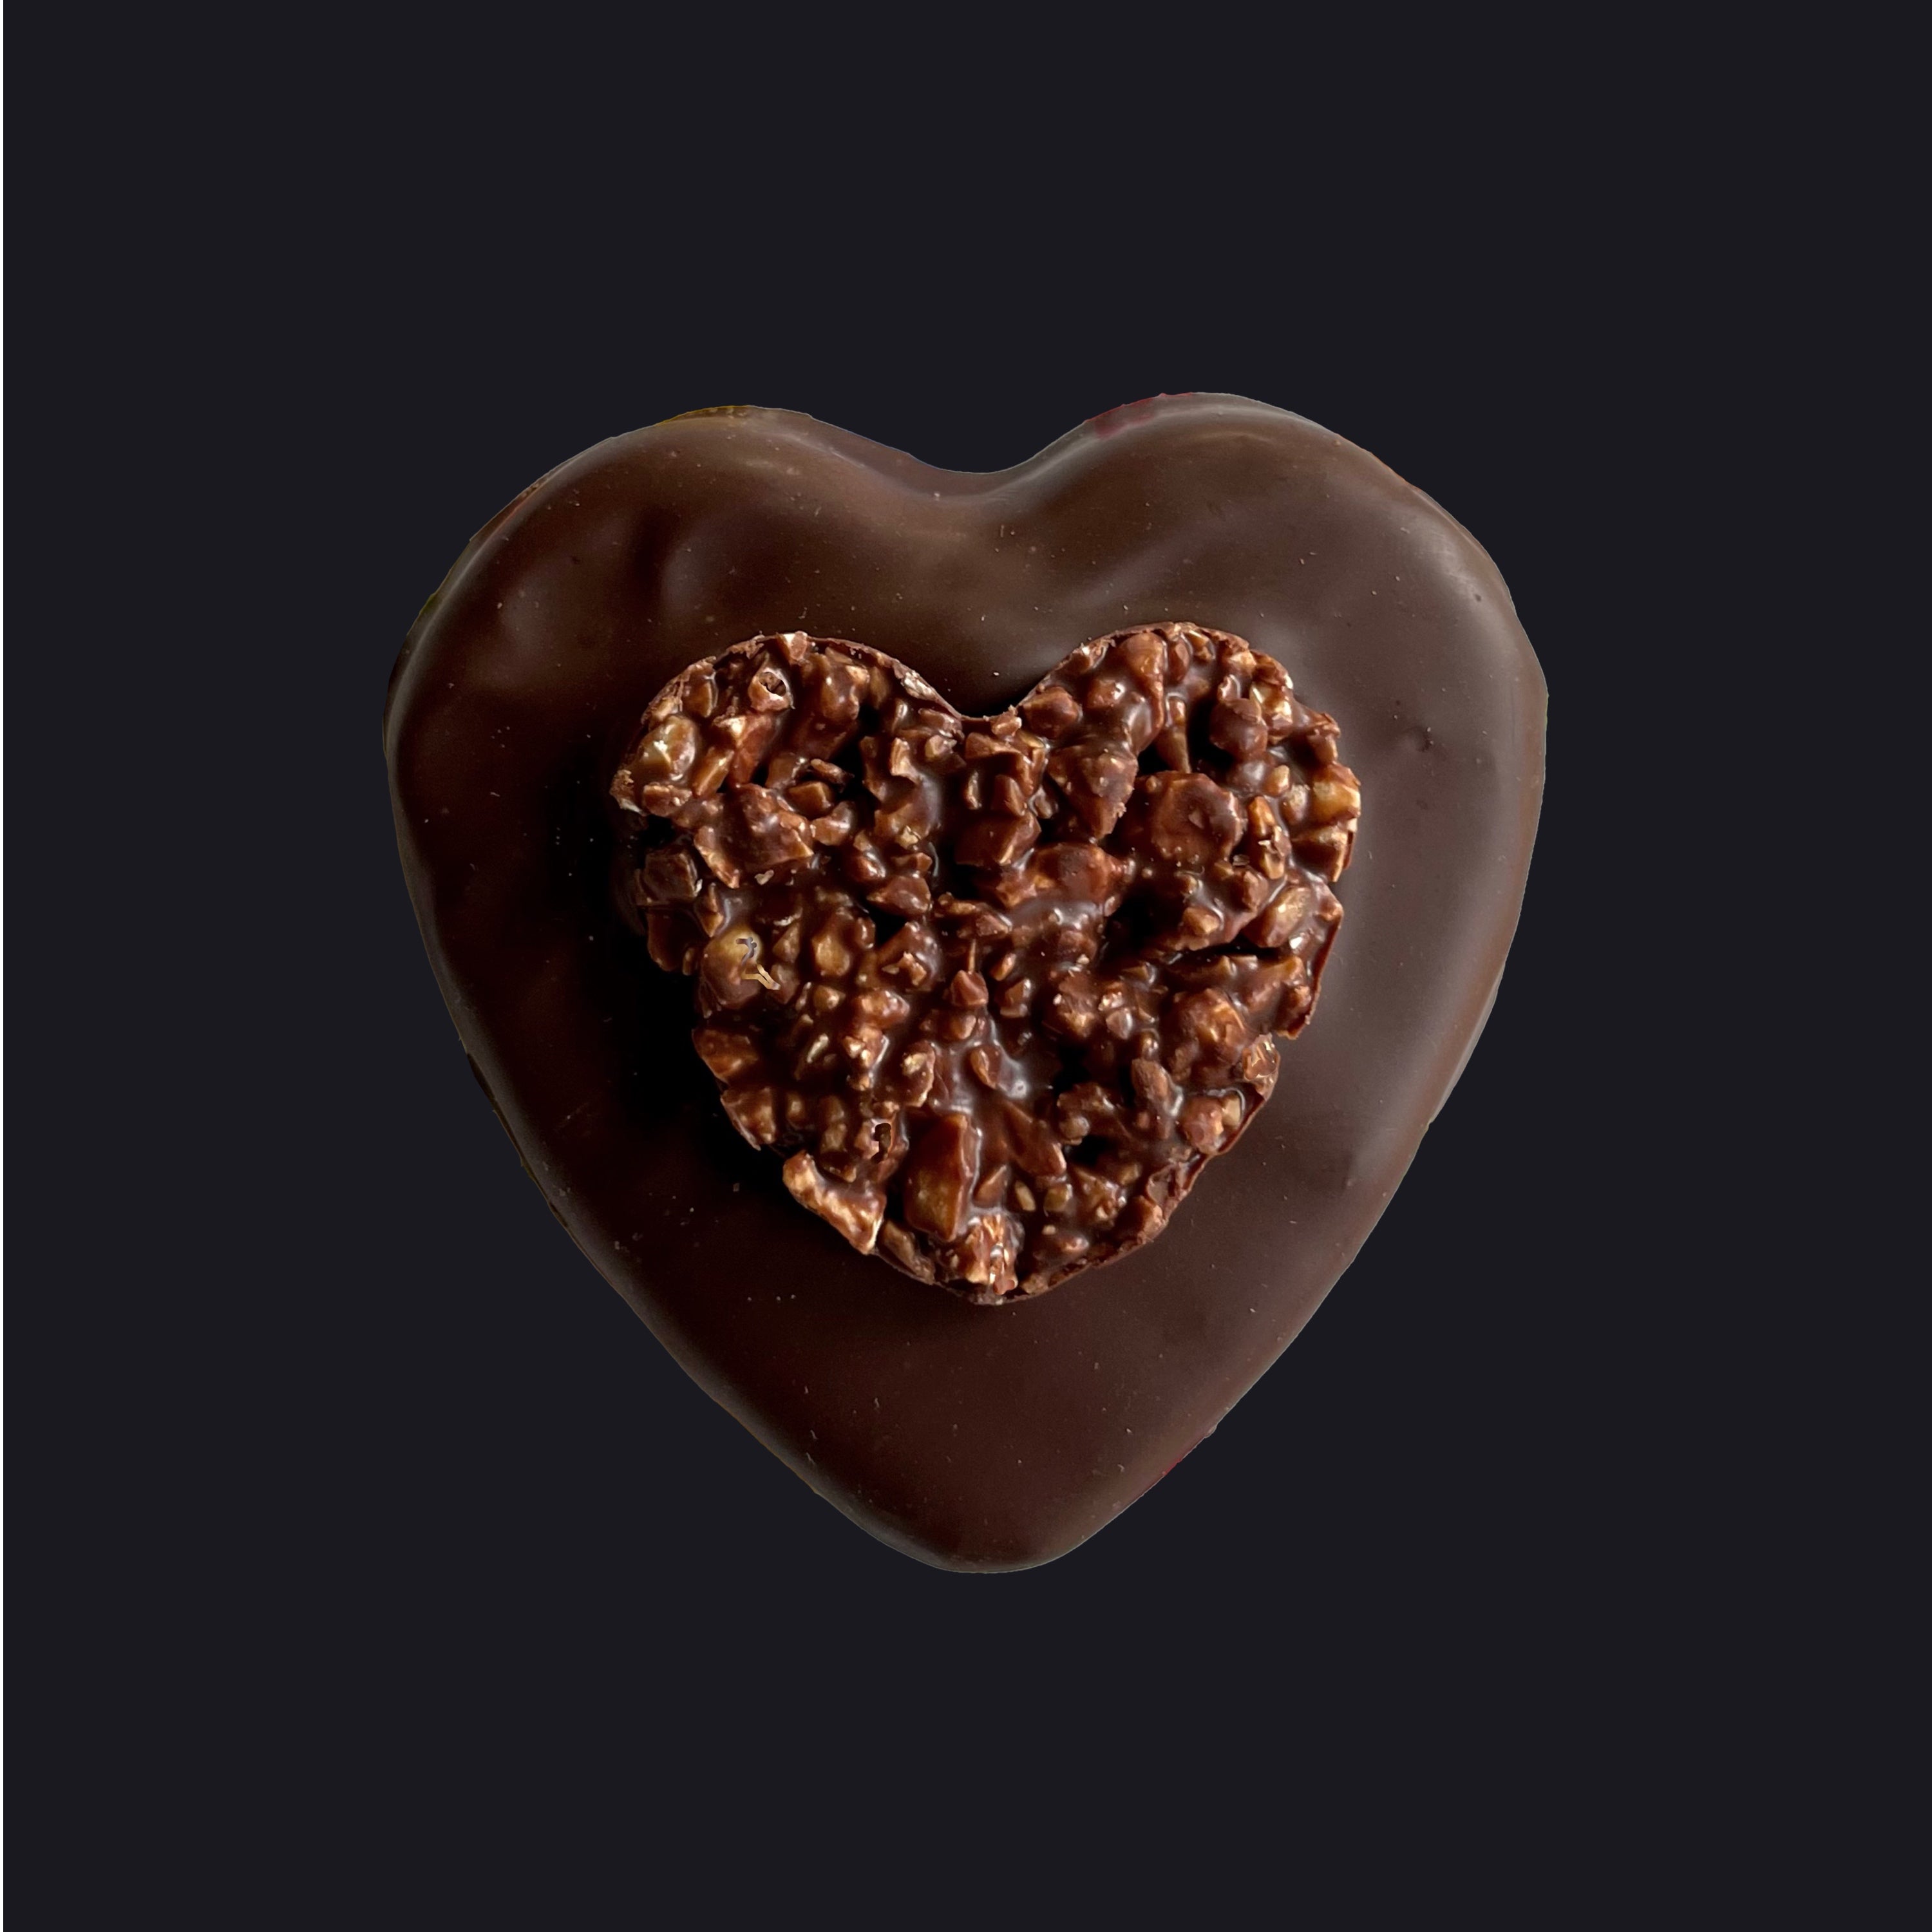 Heart Shaped Chocolate by Wild Peaks, Redmond, WA